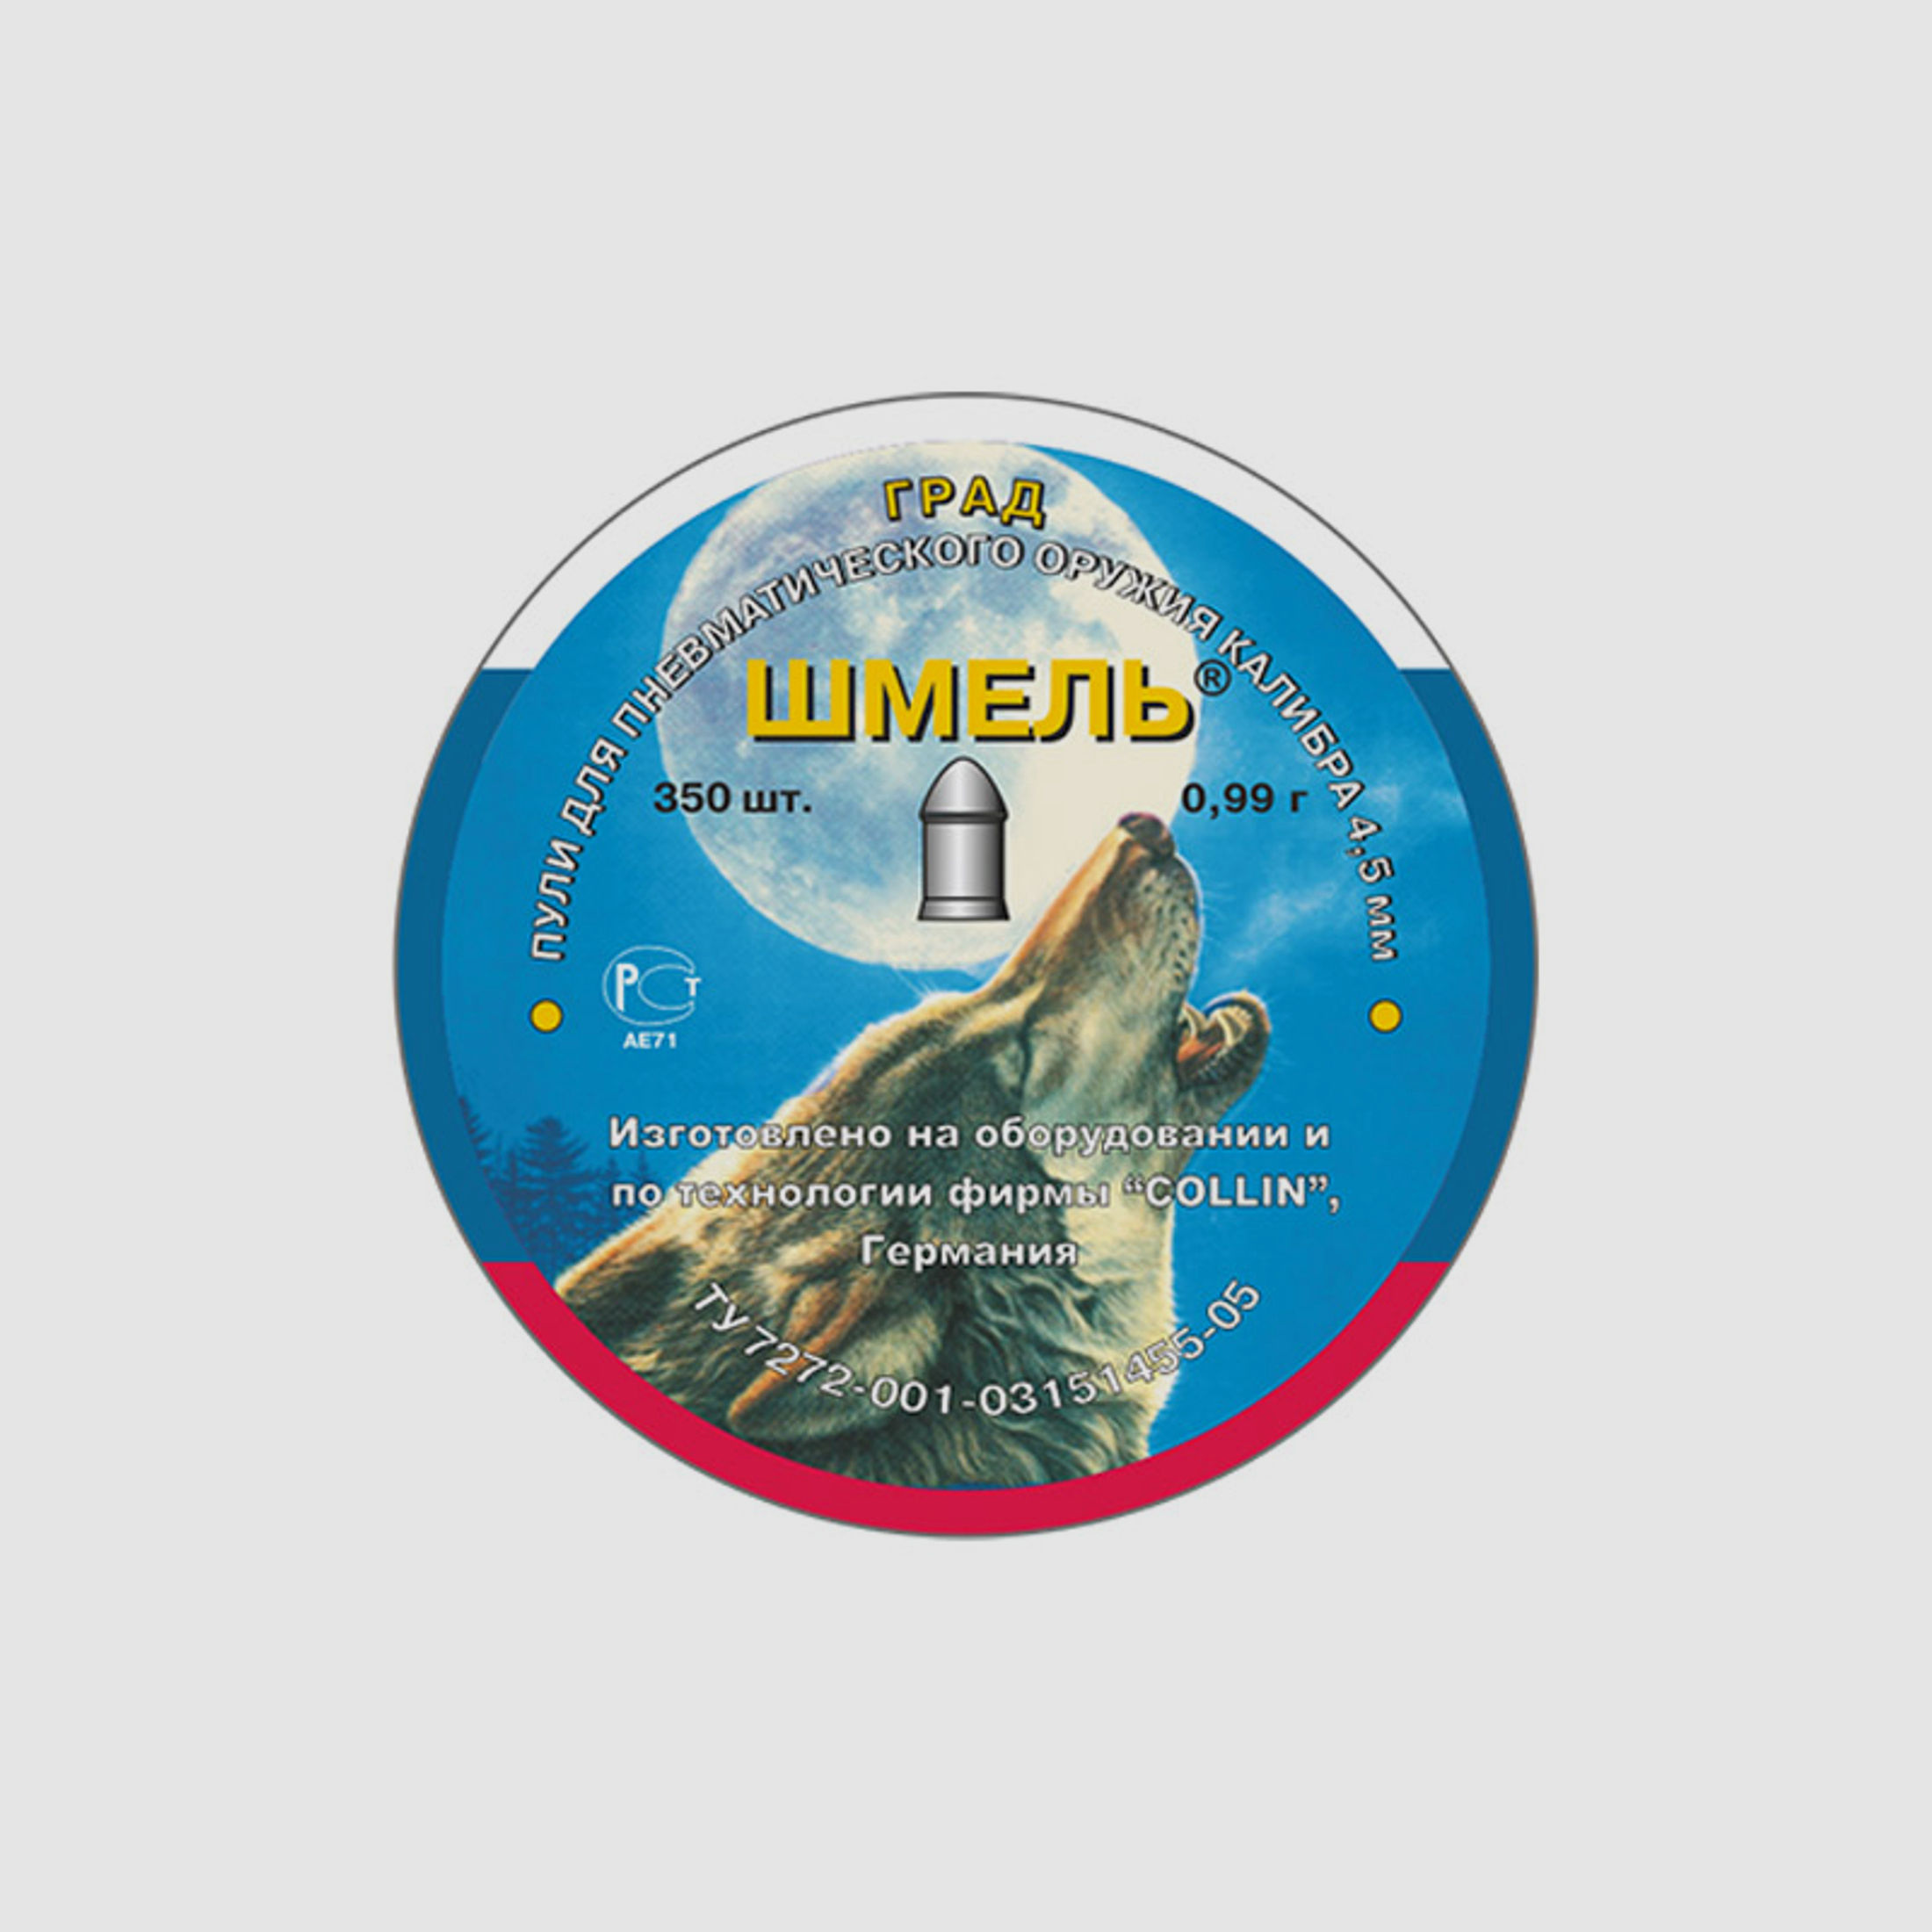 Rundkopf Diabolos Shmel Volley Diabolo Kaliber 4,5 mm 0,99 g glatt 350 StĂĽck